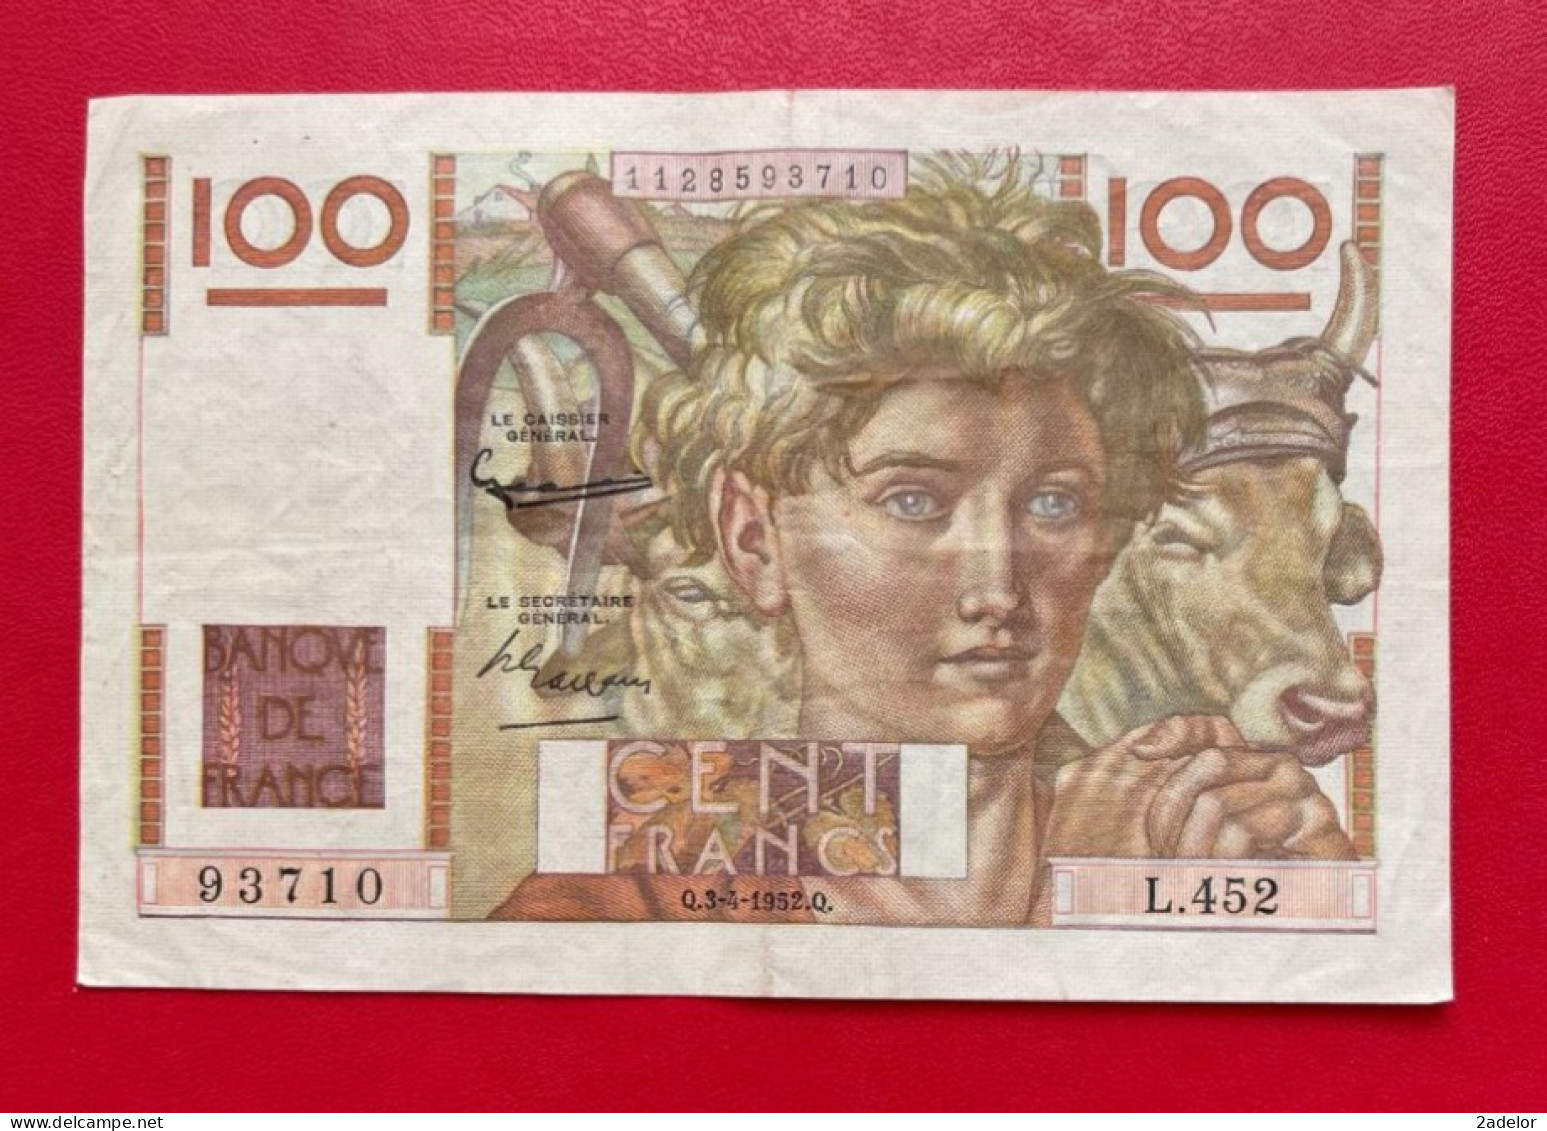 Beau Billet De 100 Francs Jeune Paysan Q.3-4-1952.Q. Etat TTB/TTB+ - 100 F 1945-1954 ''Jeune Paysan''